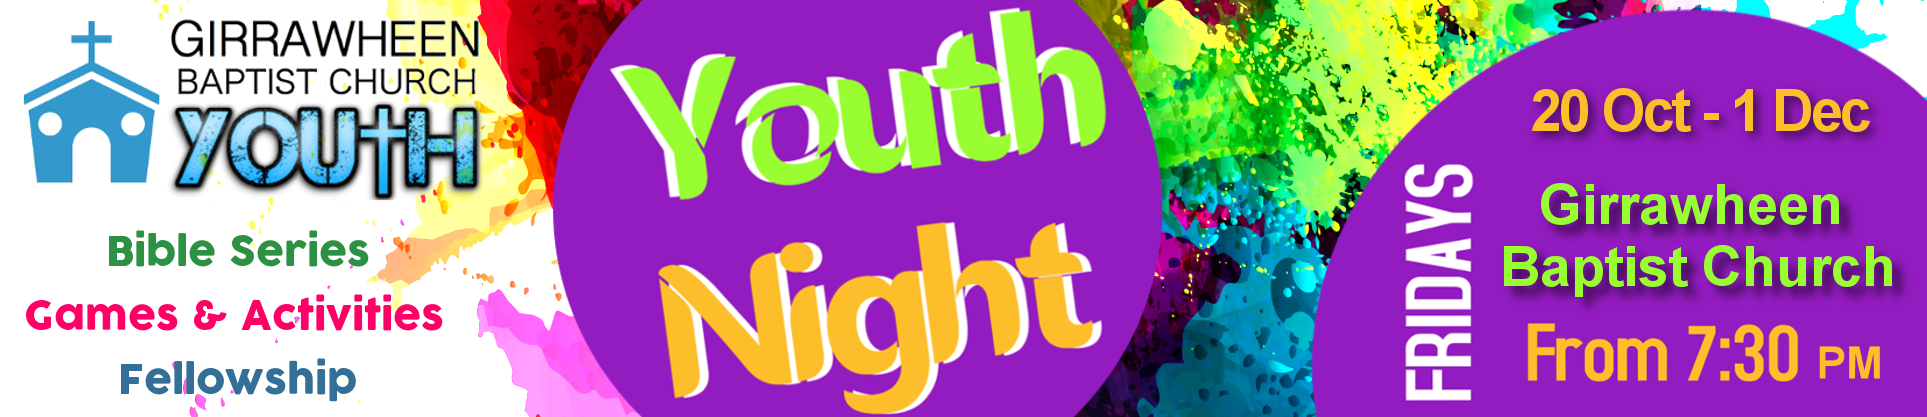 Youth Night 2017 Term 4